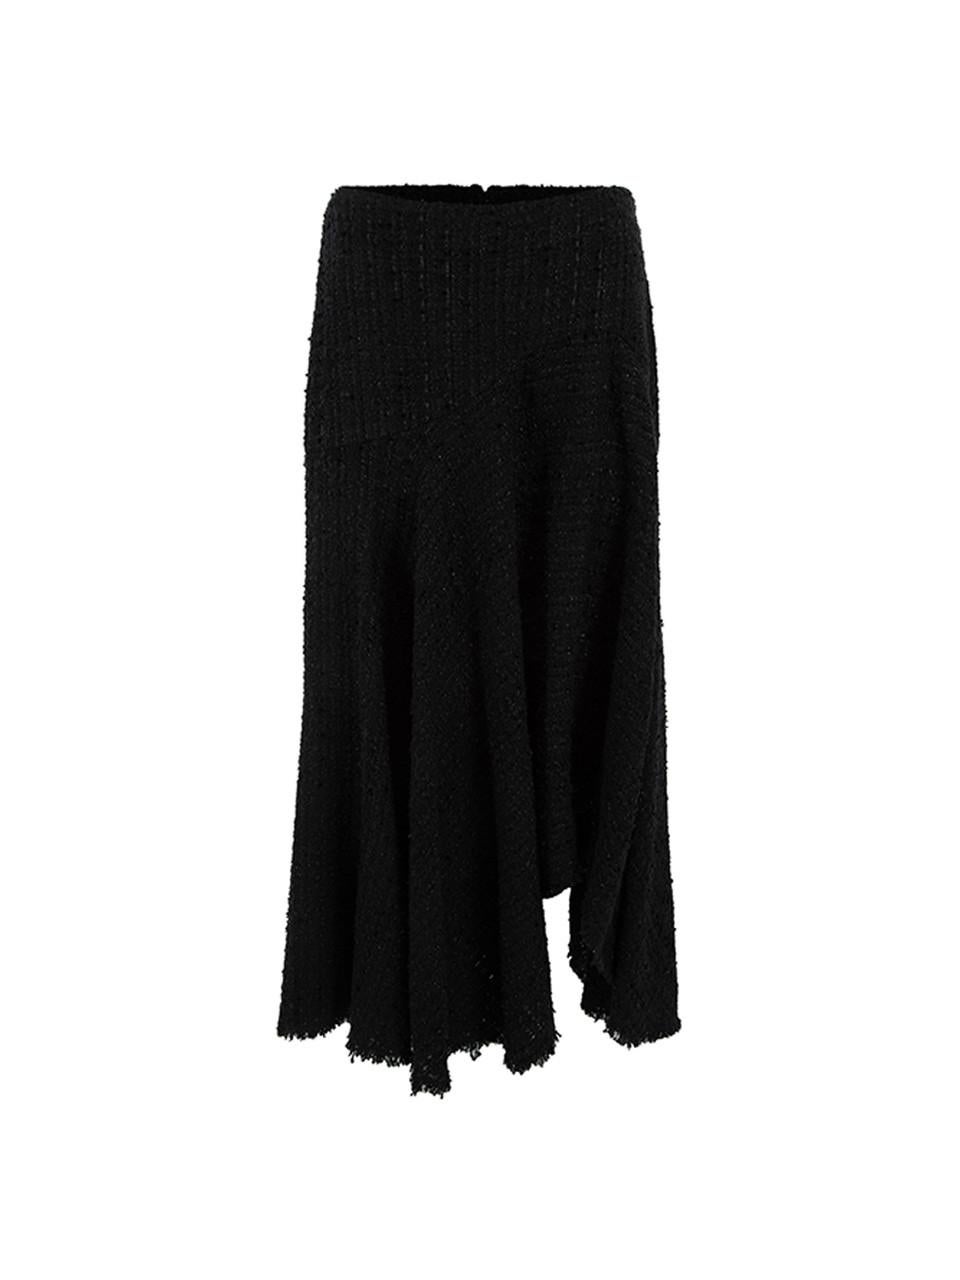 Alexander McQueen Women's Black Metallic Thread Midi Skirt